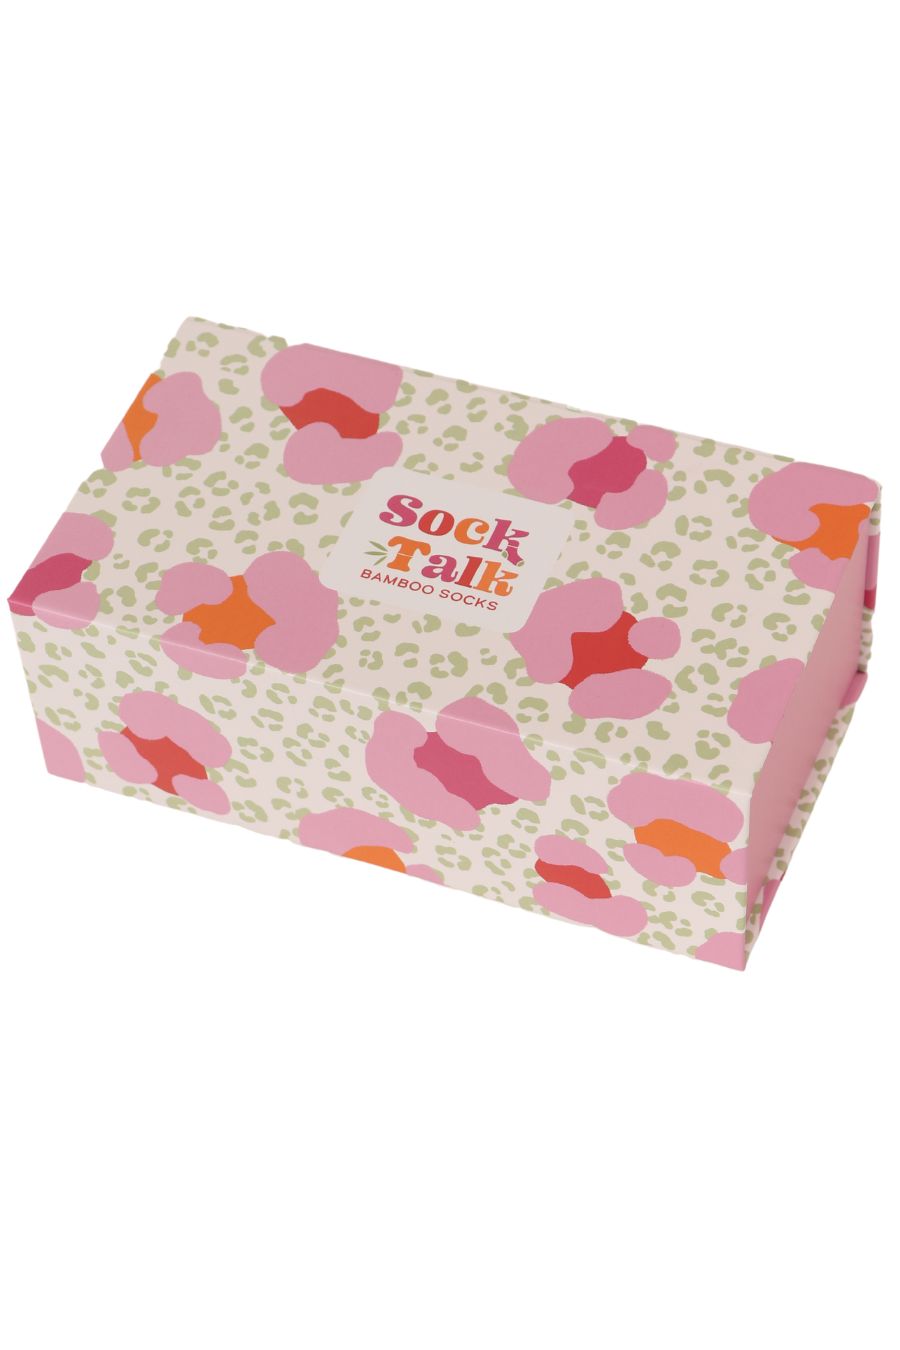 A closed pink animal print gift box